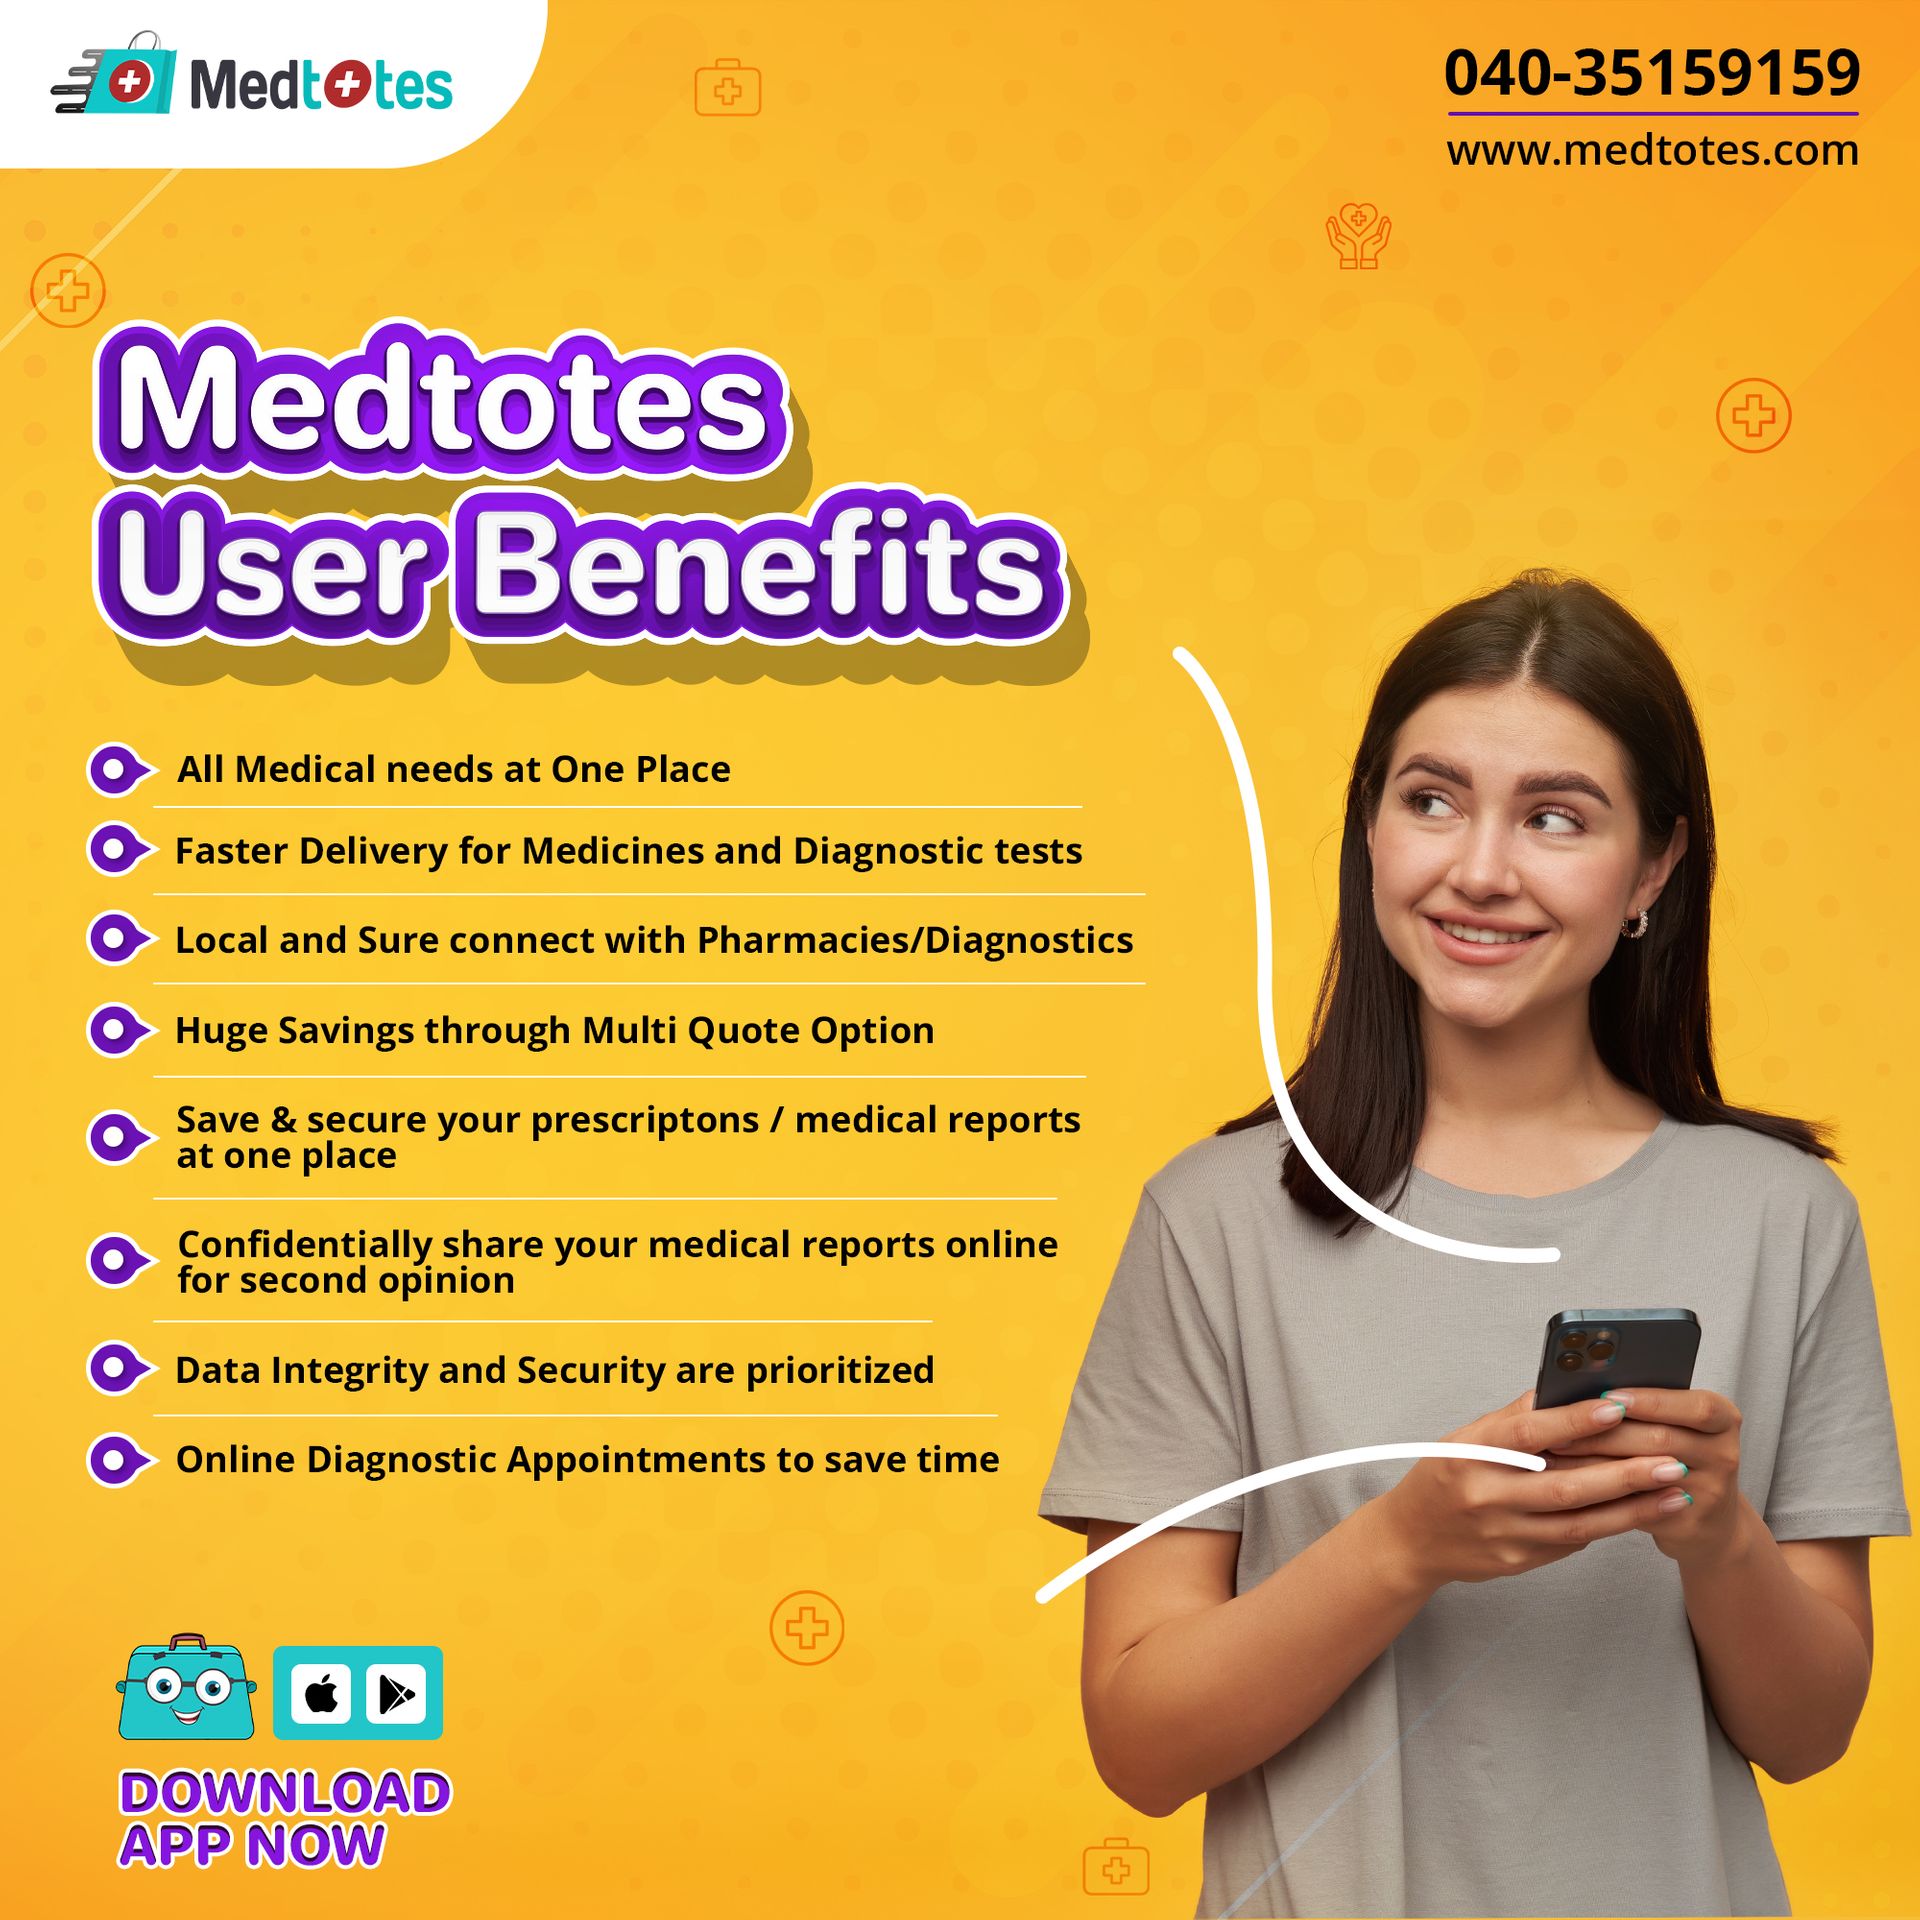 Medtotes User Benefits